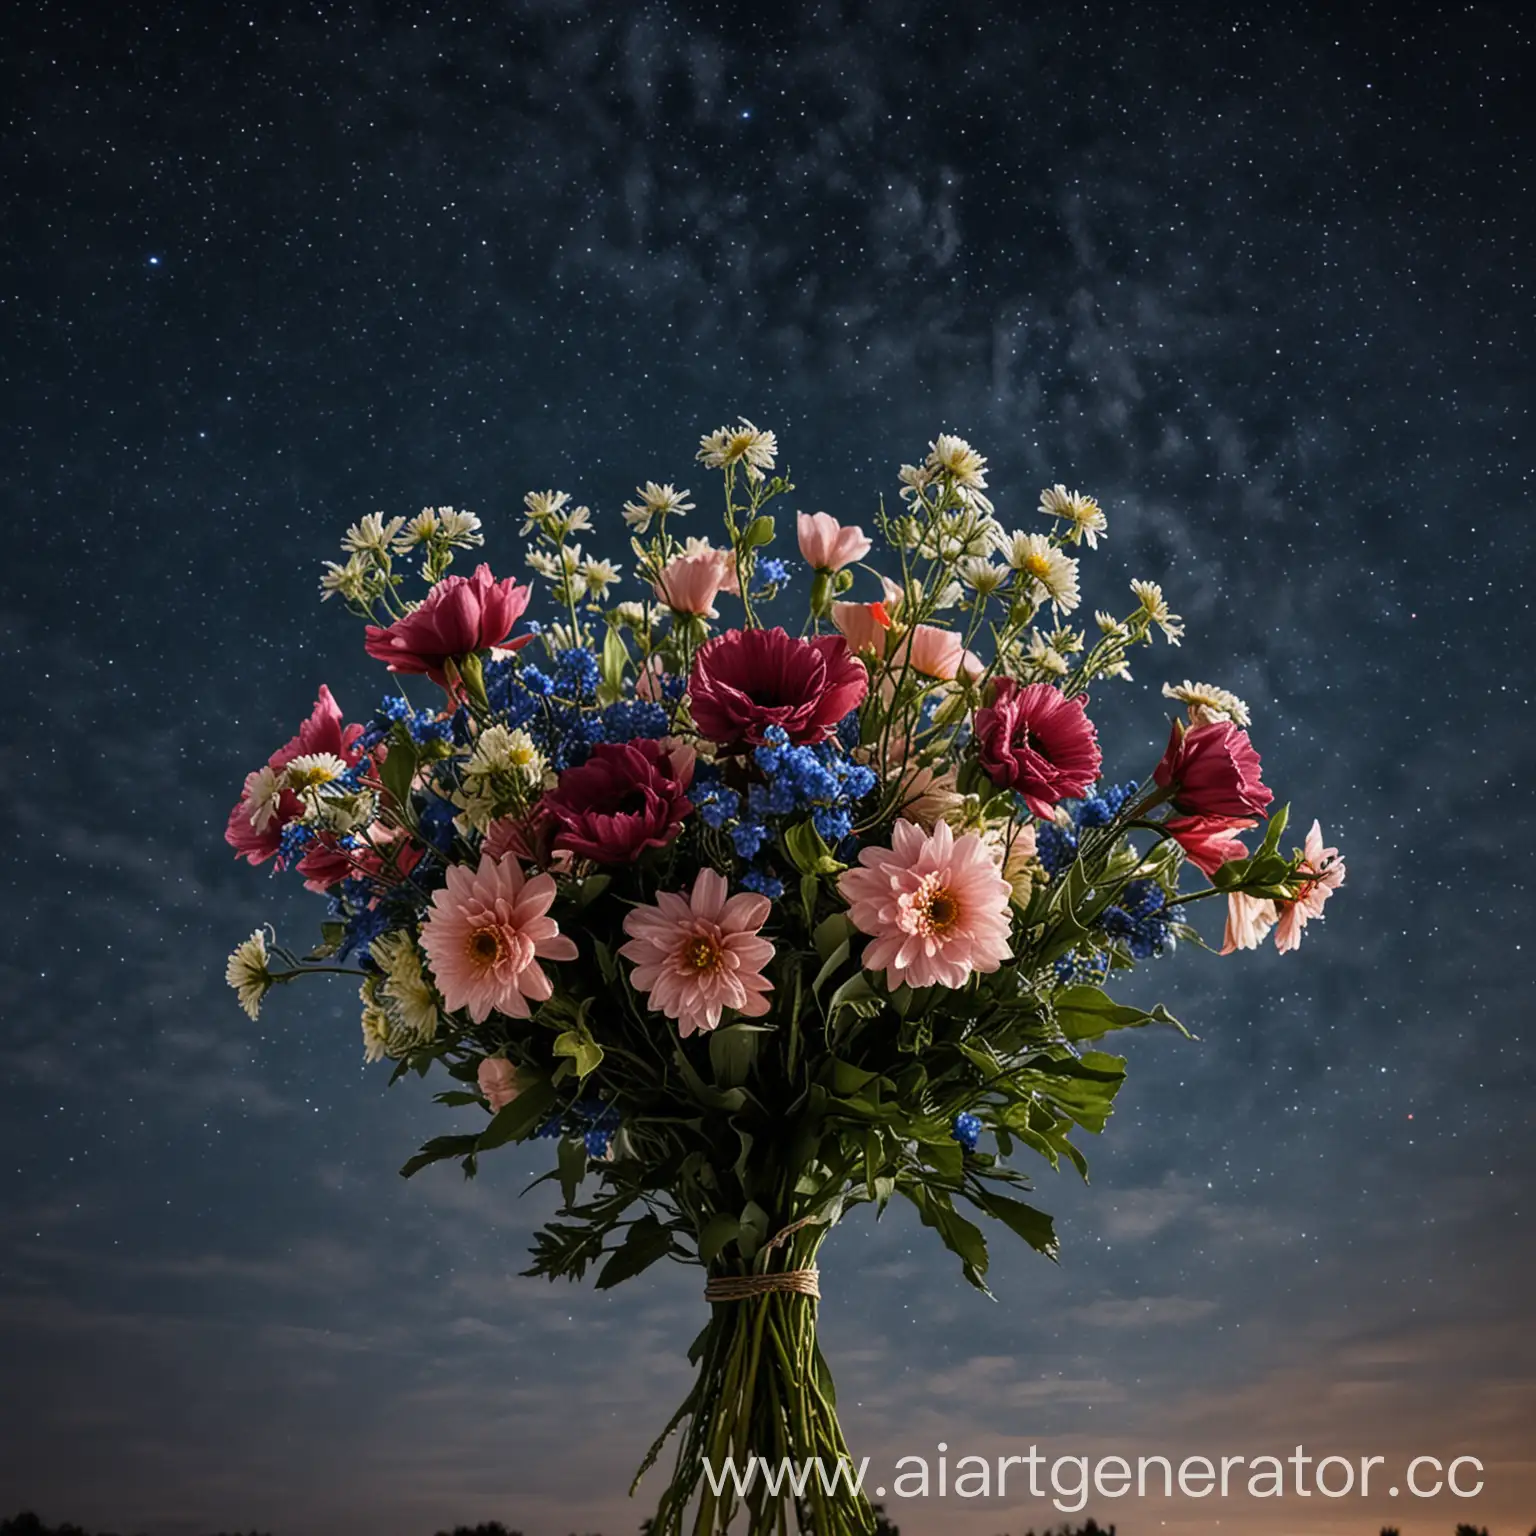 Enchanting-Night-Sky-Bouquet-Vibrant-Flowers-Illuminated-by-Moonlight